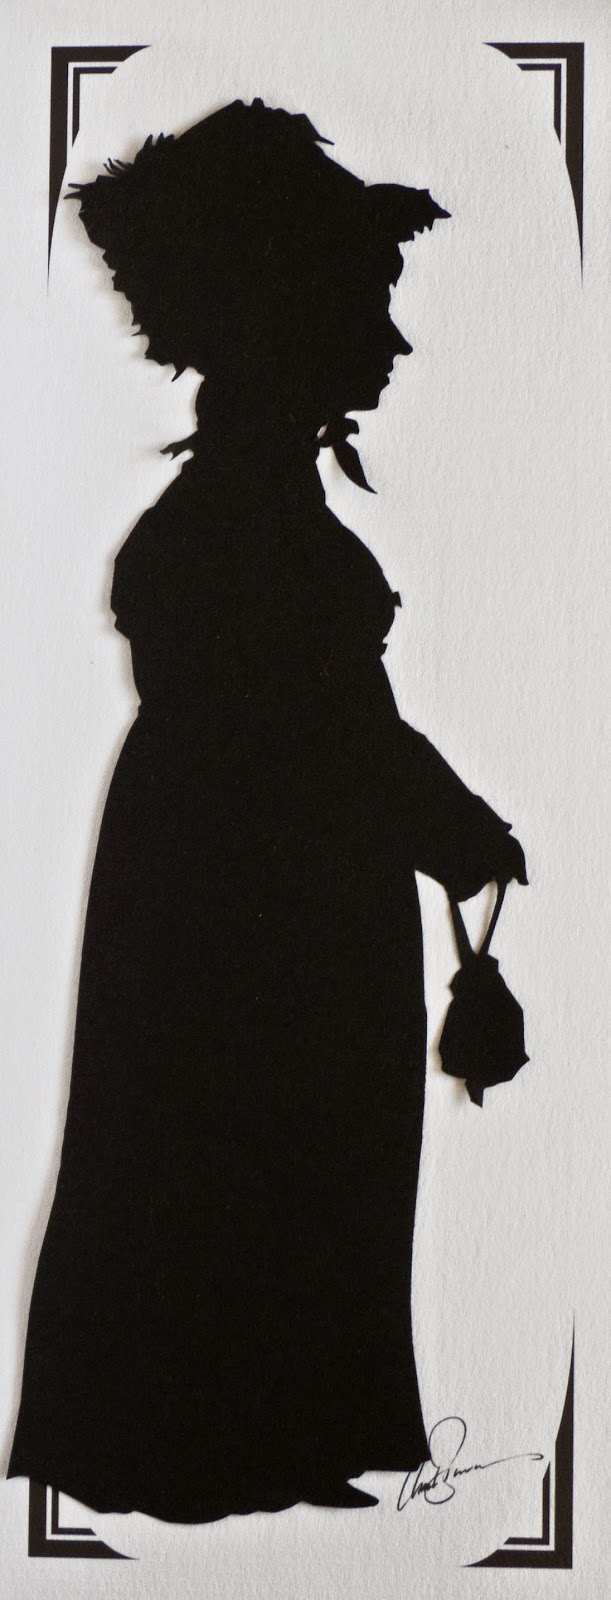 Silhouette of Rachel Knowles in Regency costume by The Roving Artist